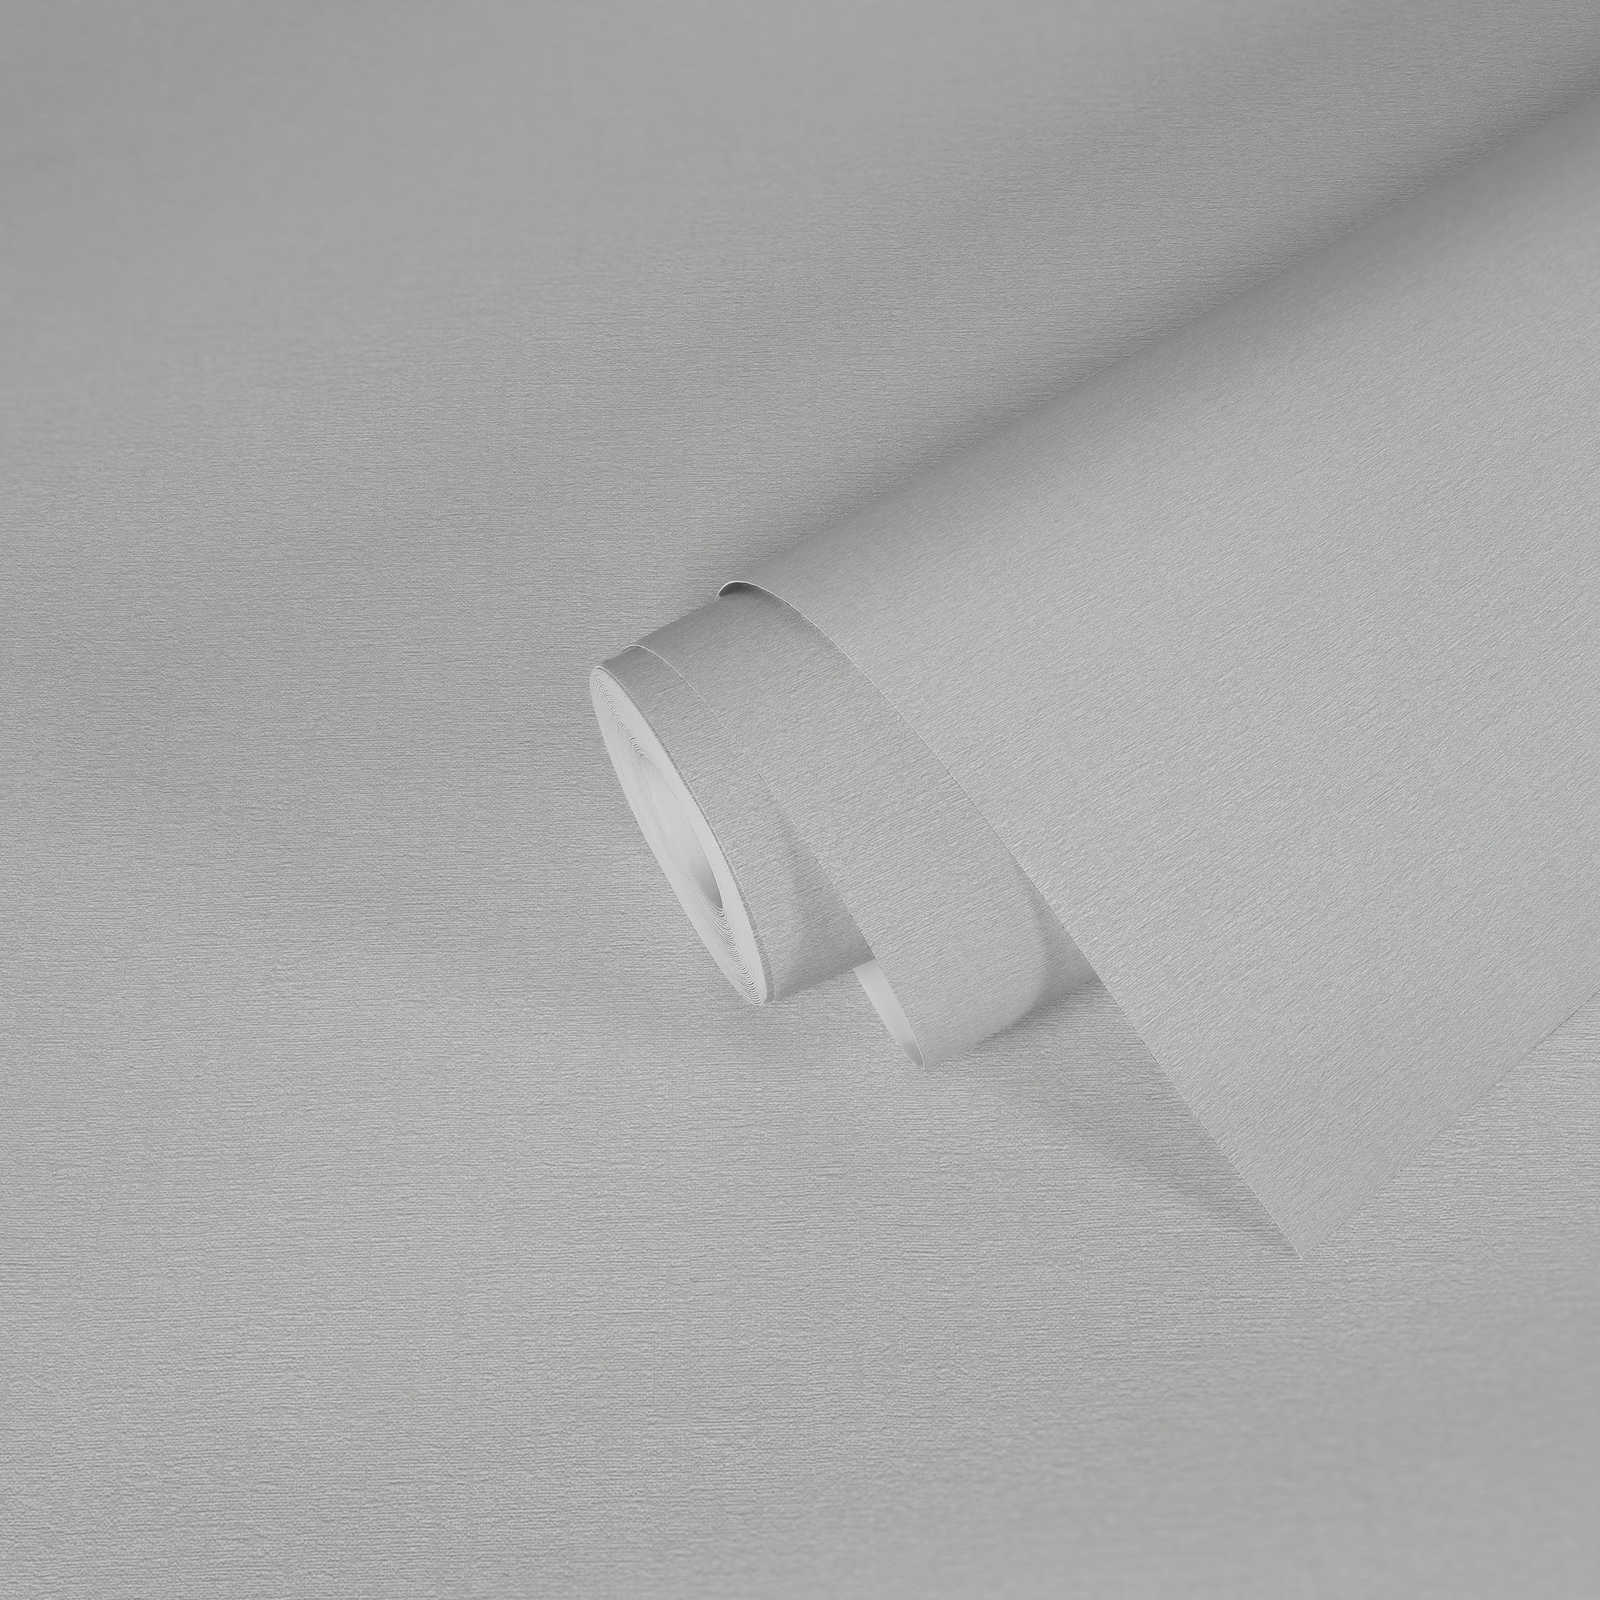             Carta da parati a struttura leggera dall'aspetto opaco - bianco
        